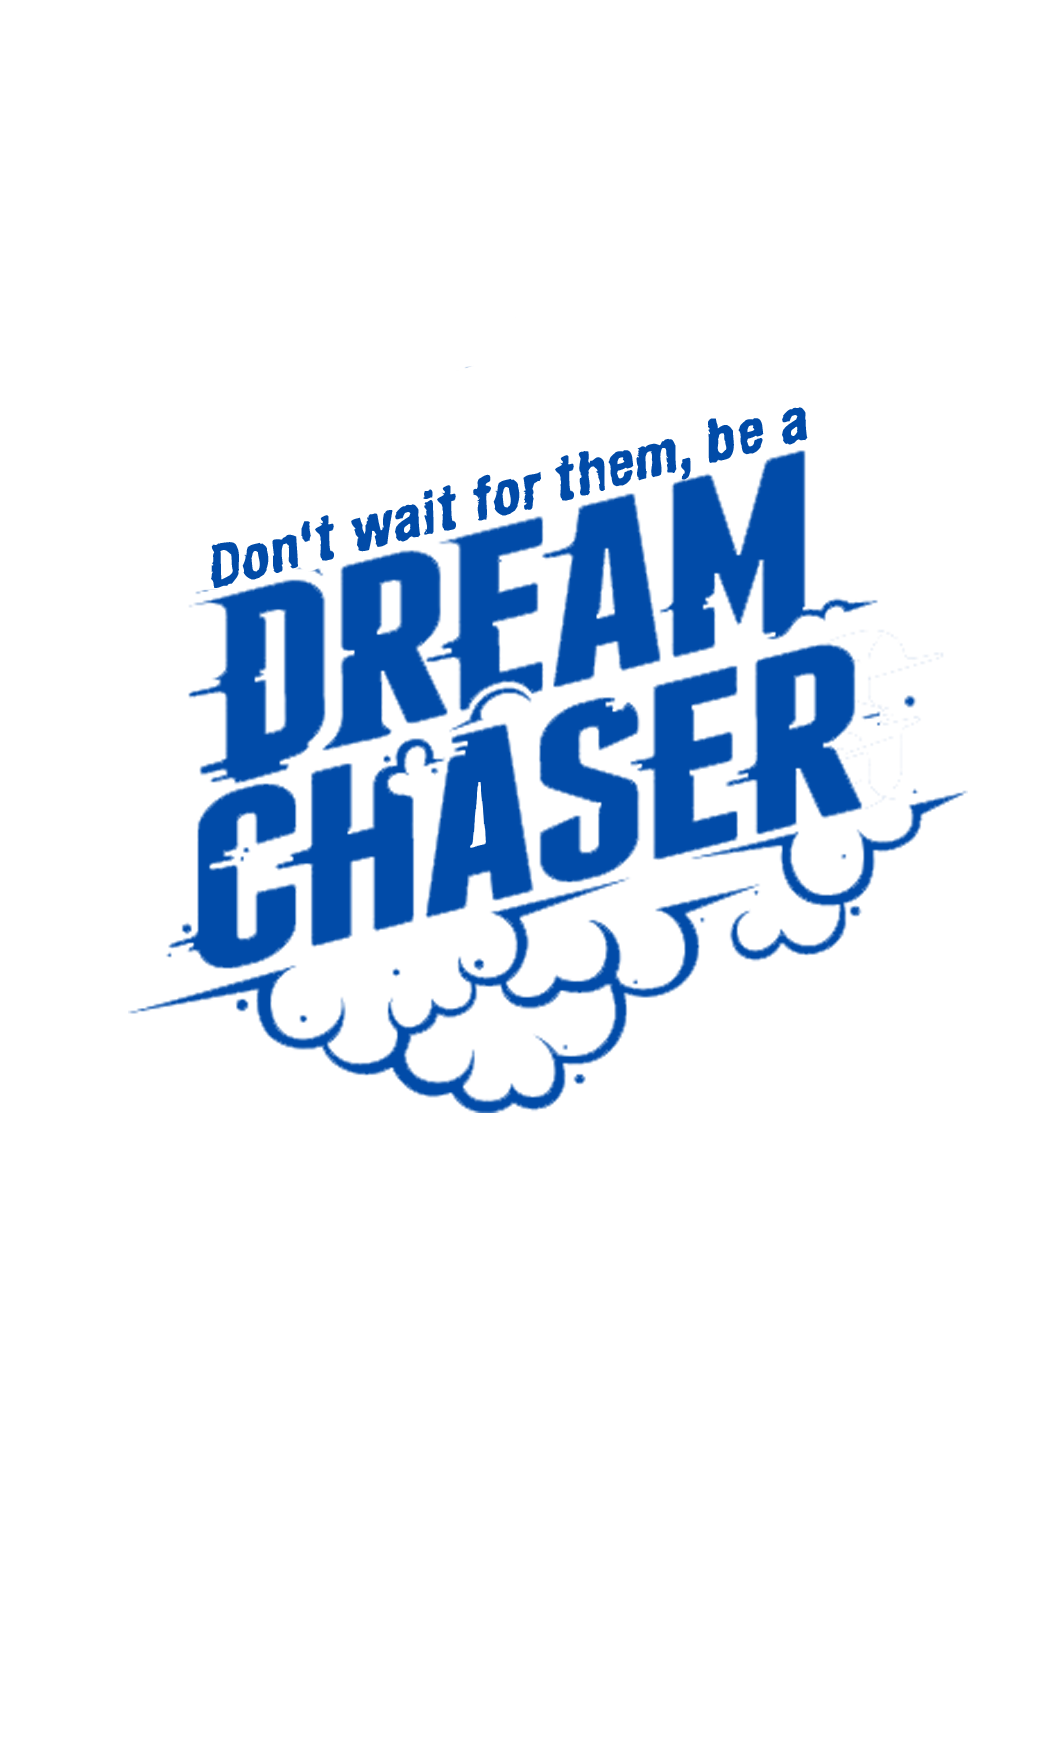 Сон Chasers logo PNG Image Прозрачный фон